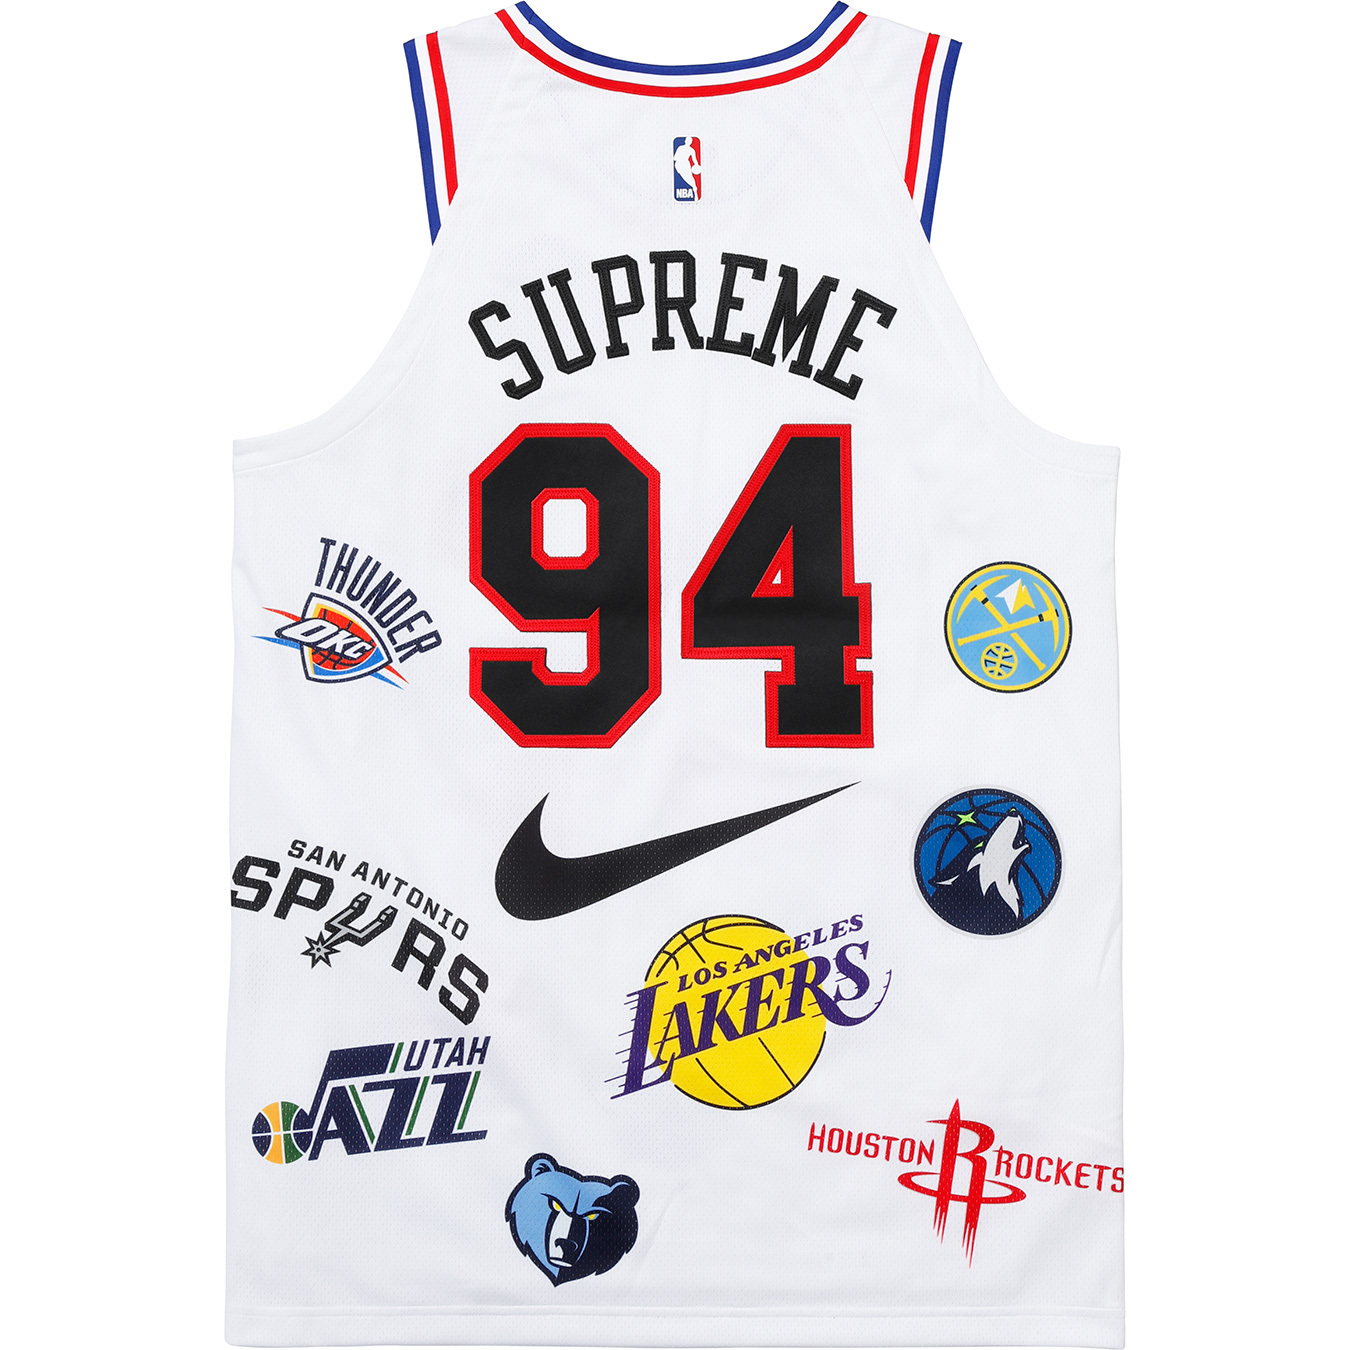 XSupreme Nike NBA Teams Authentic Jersey